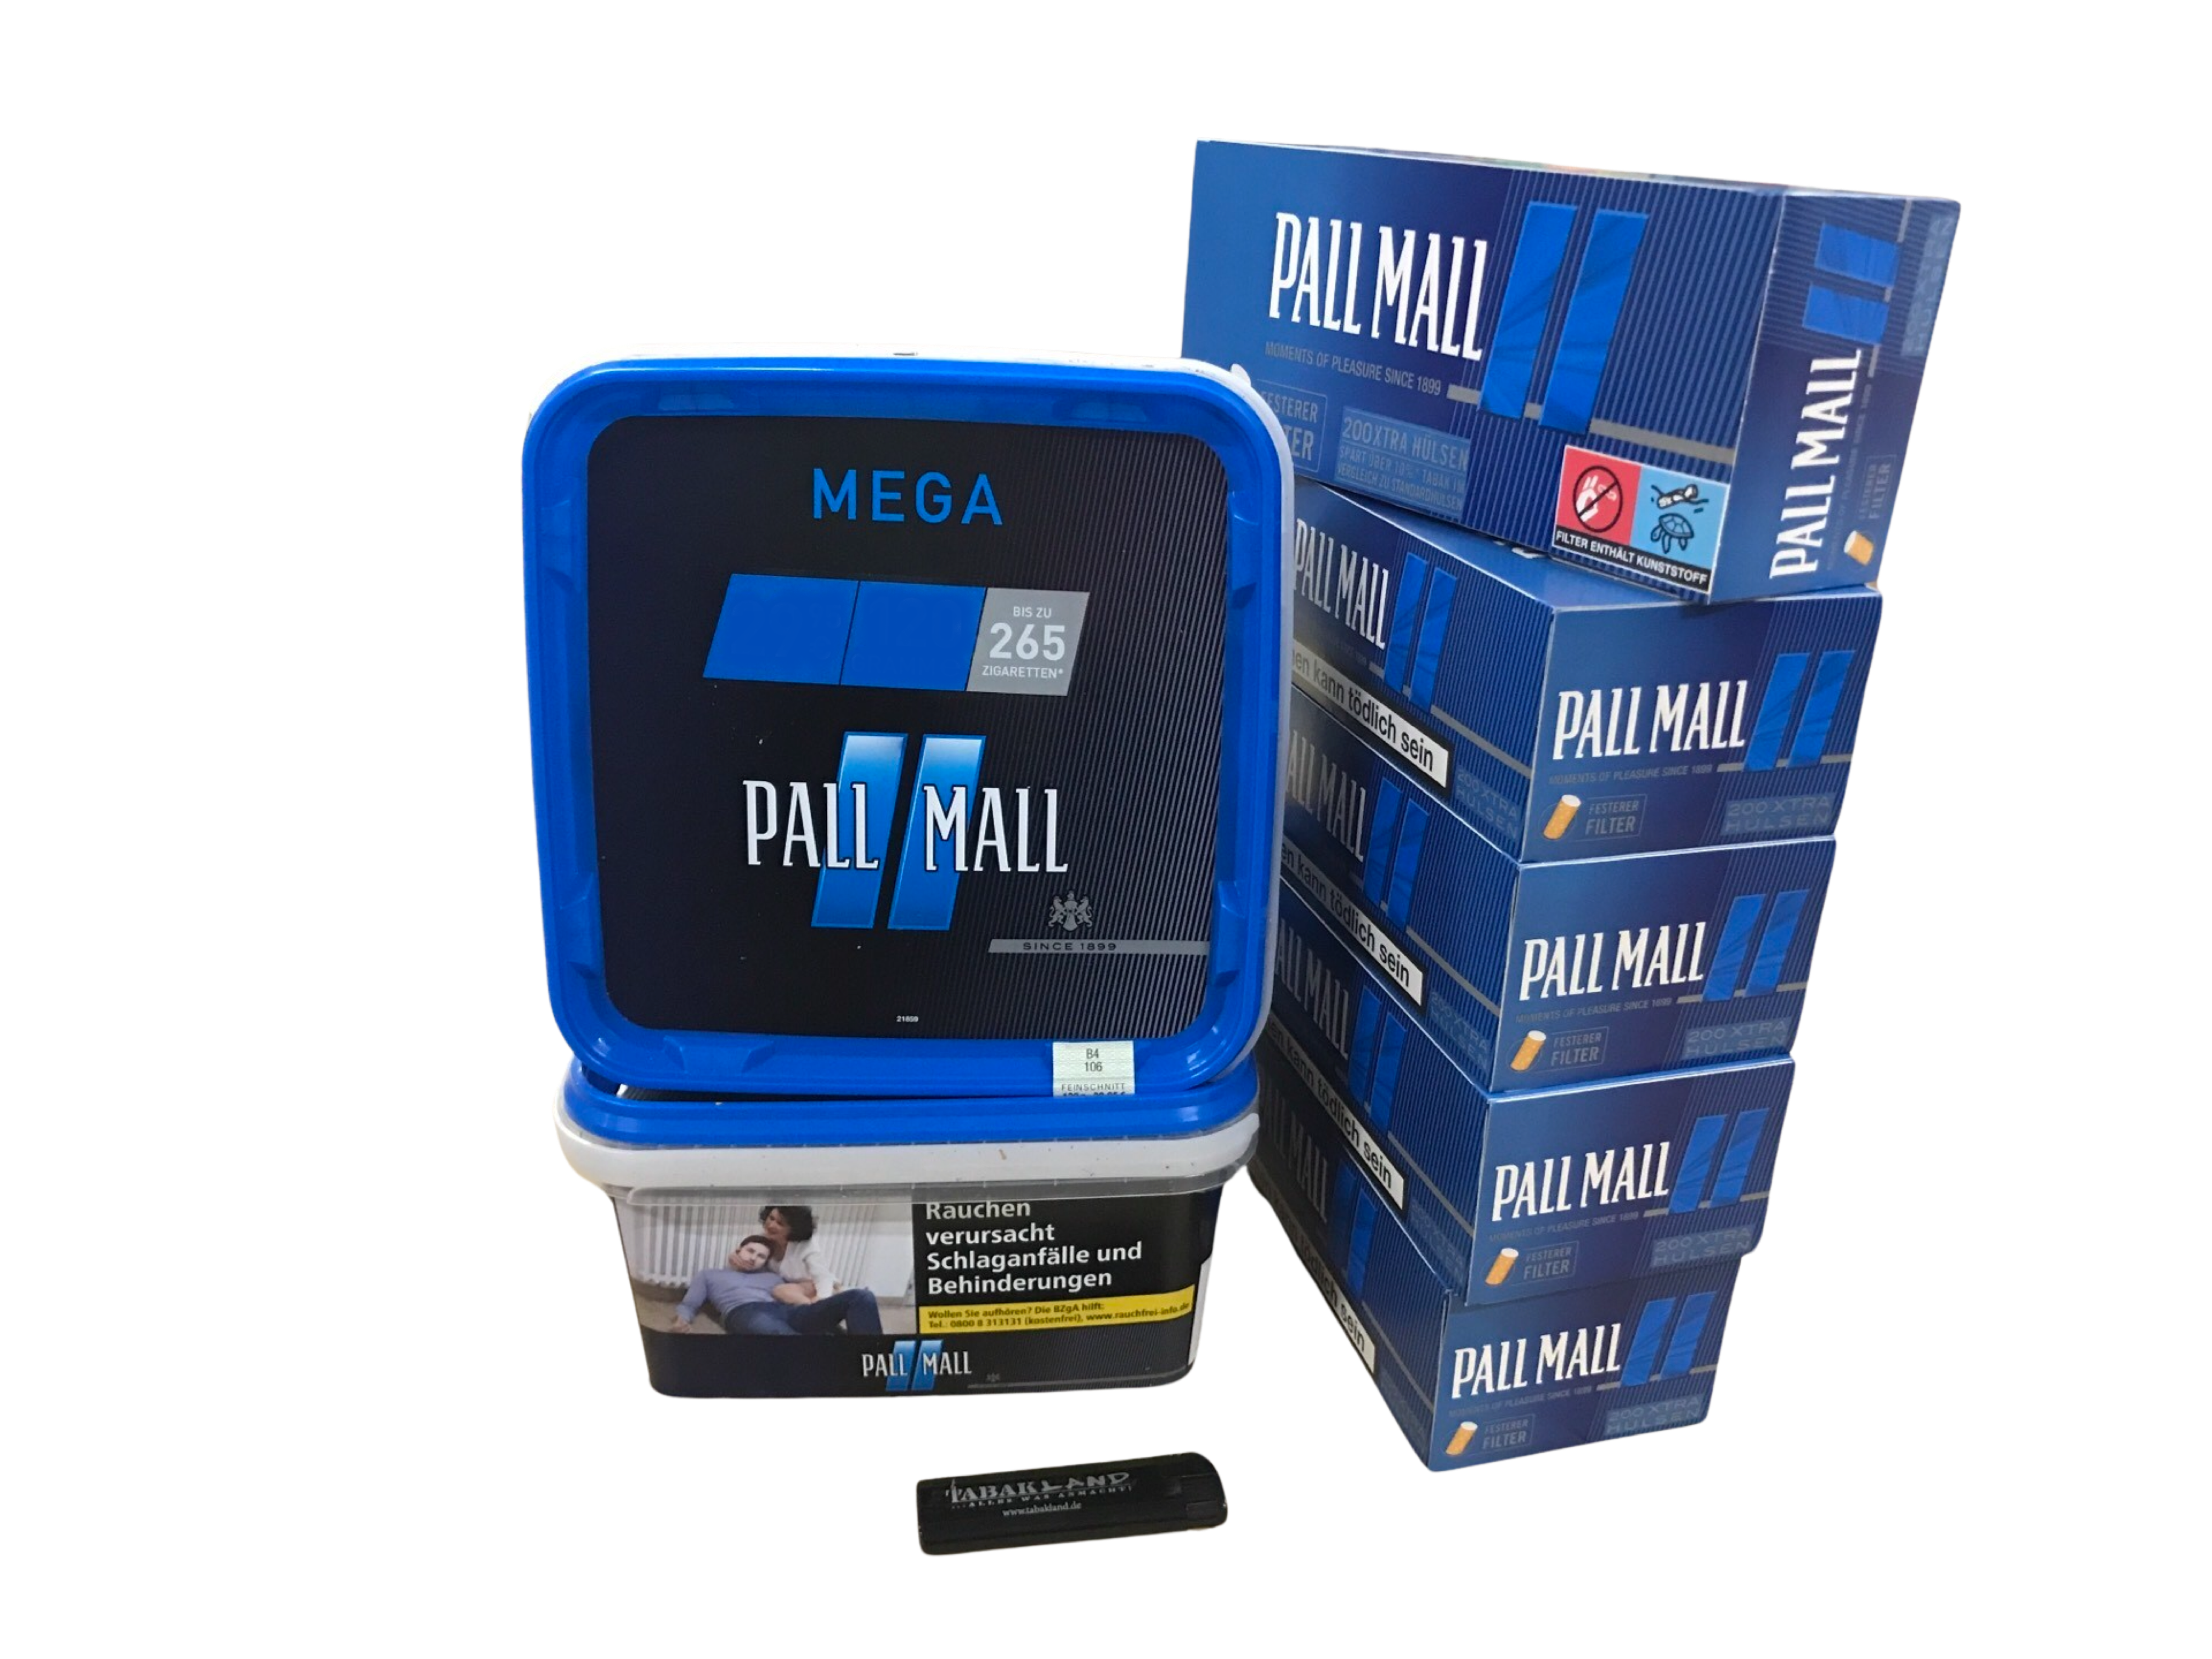 2x PALL MALL Blue Mega Eimer 135g + 1000 PALL MALL Blau Hülsen + Feuerzeug